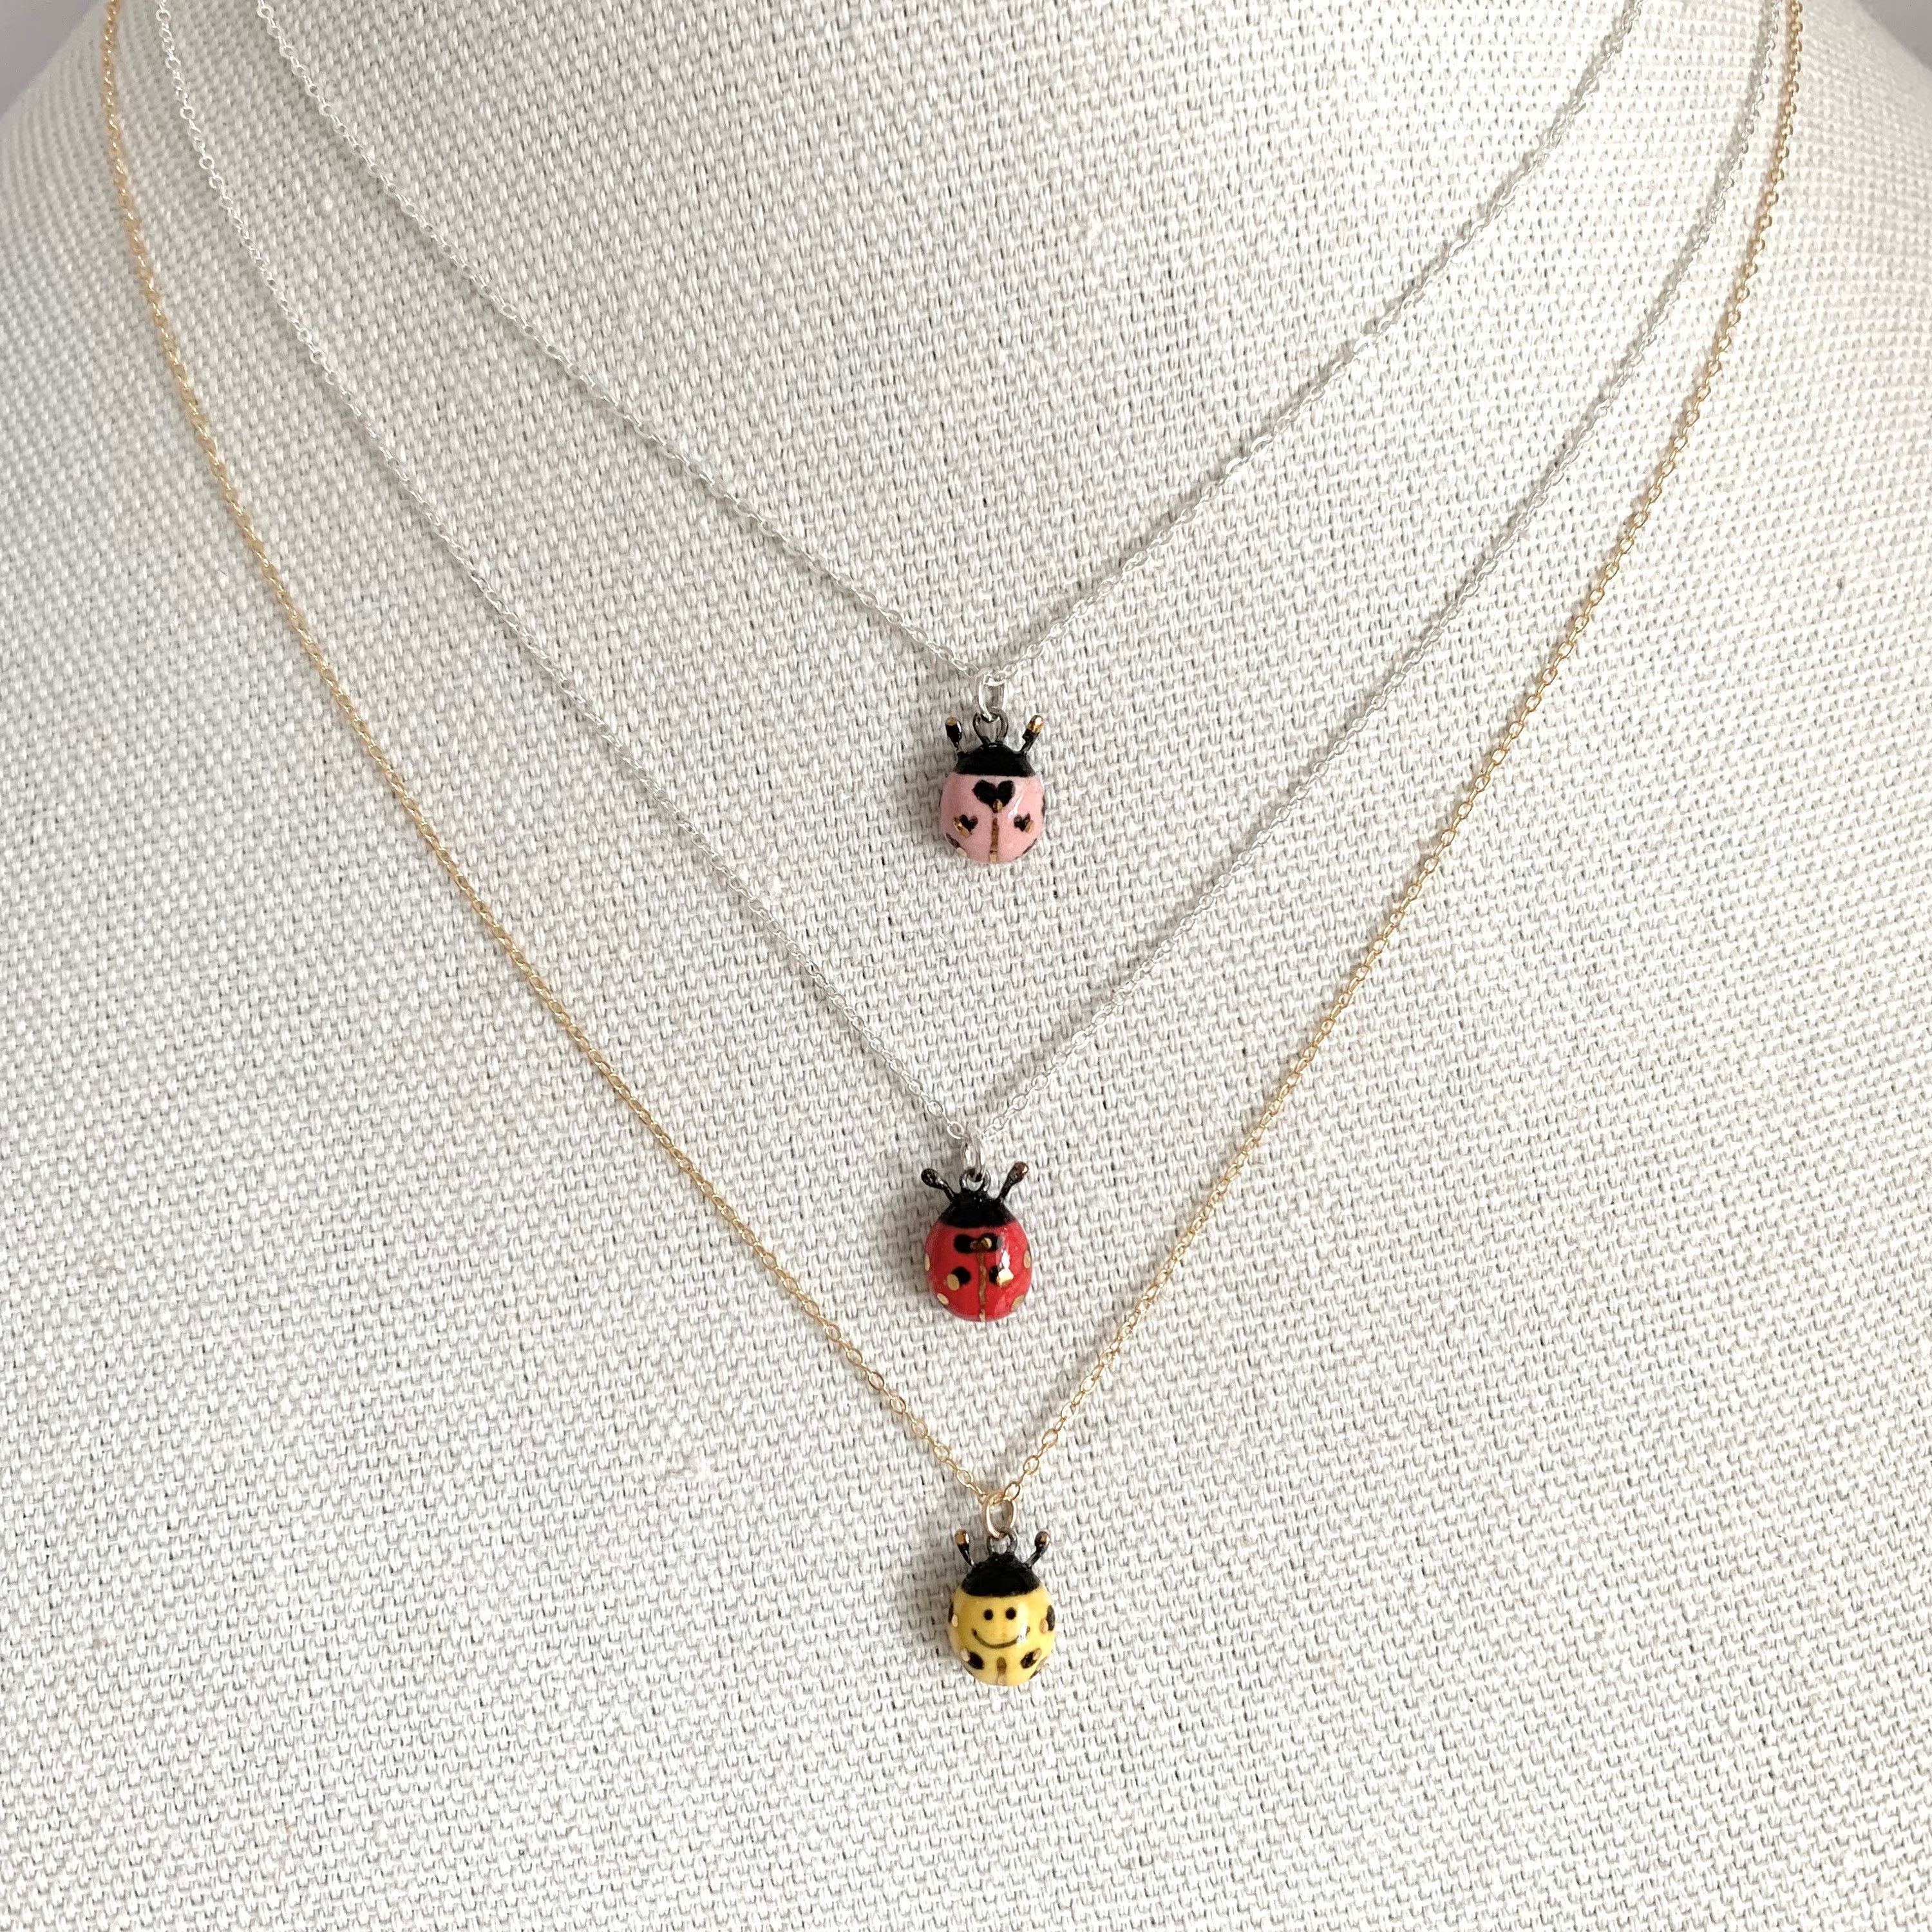 Ladybug Necklace Lady Bug Cubic Zirconia Jewelry GOLD RED BLACK 1355 | eBay